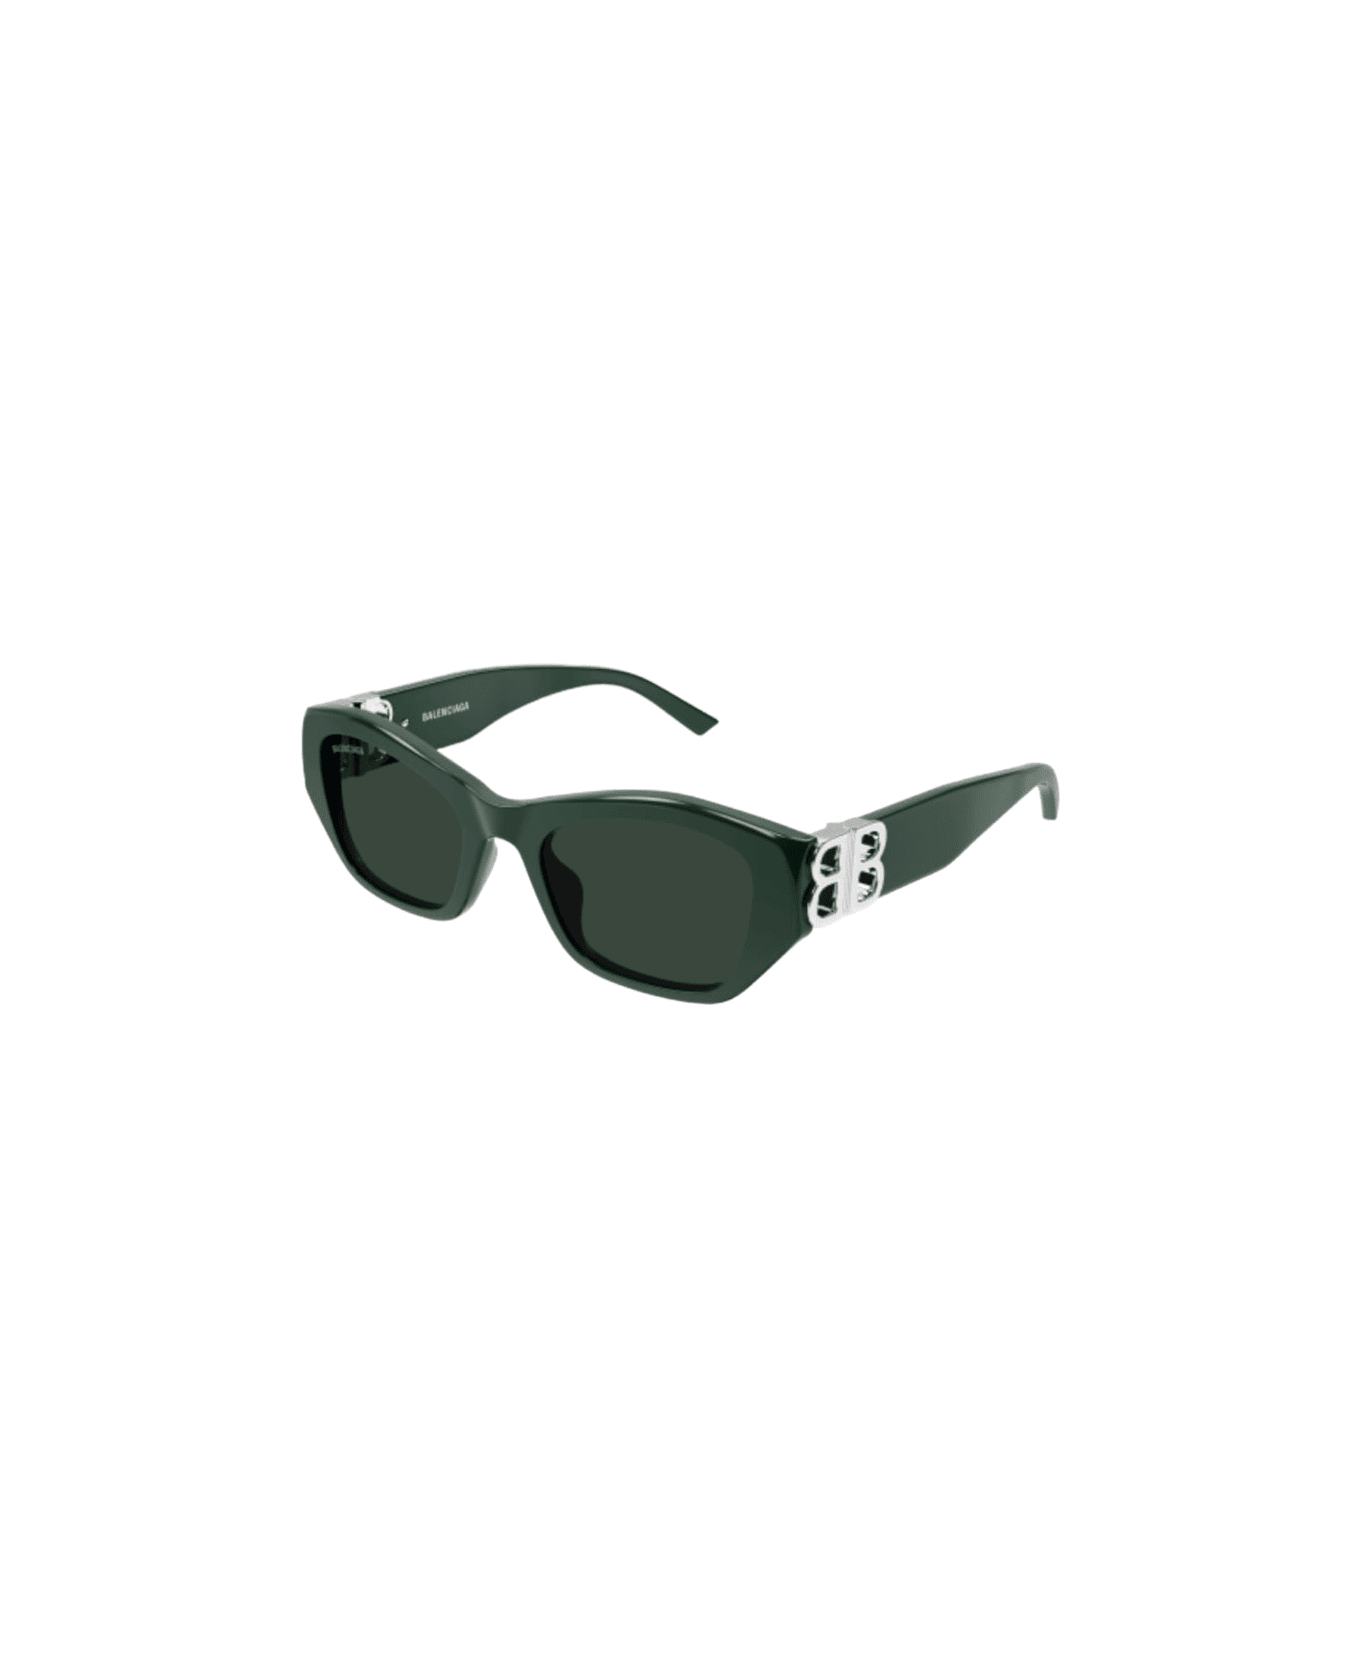 Balenciaga Eyewear Bb 0311 - Green Sunglasses サングラス